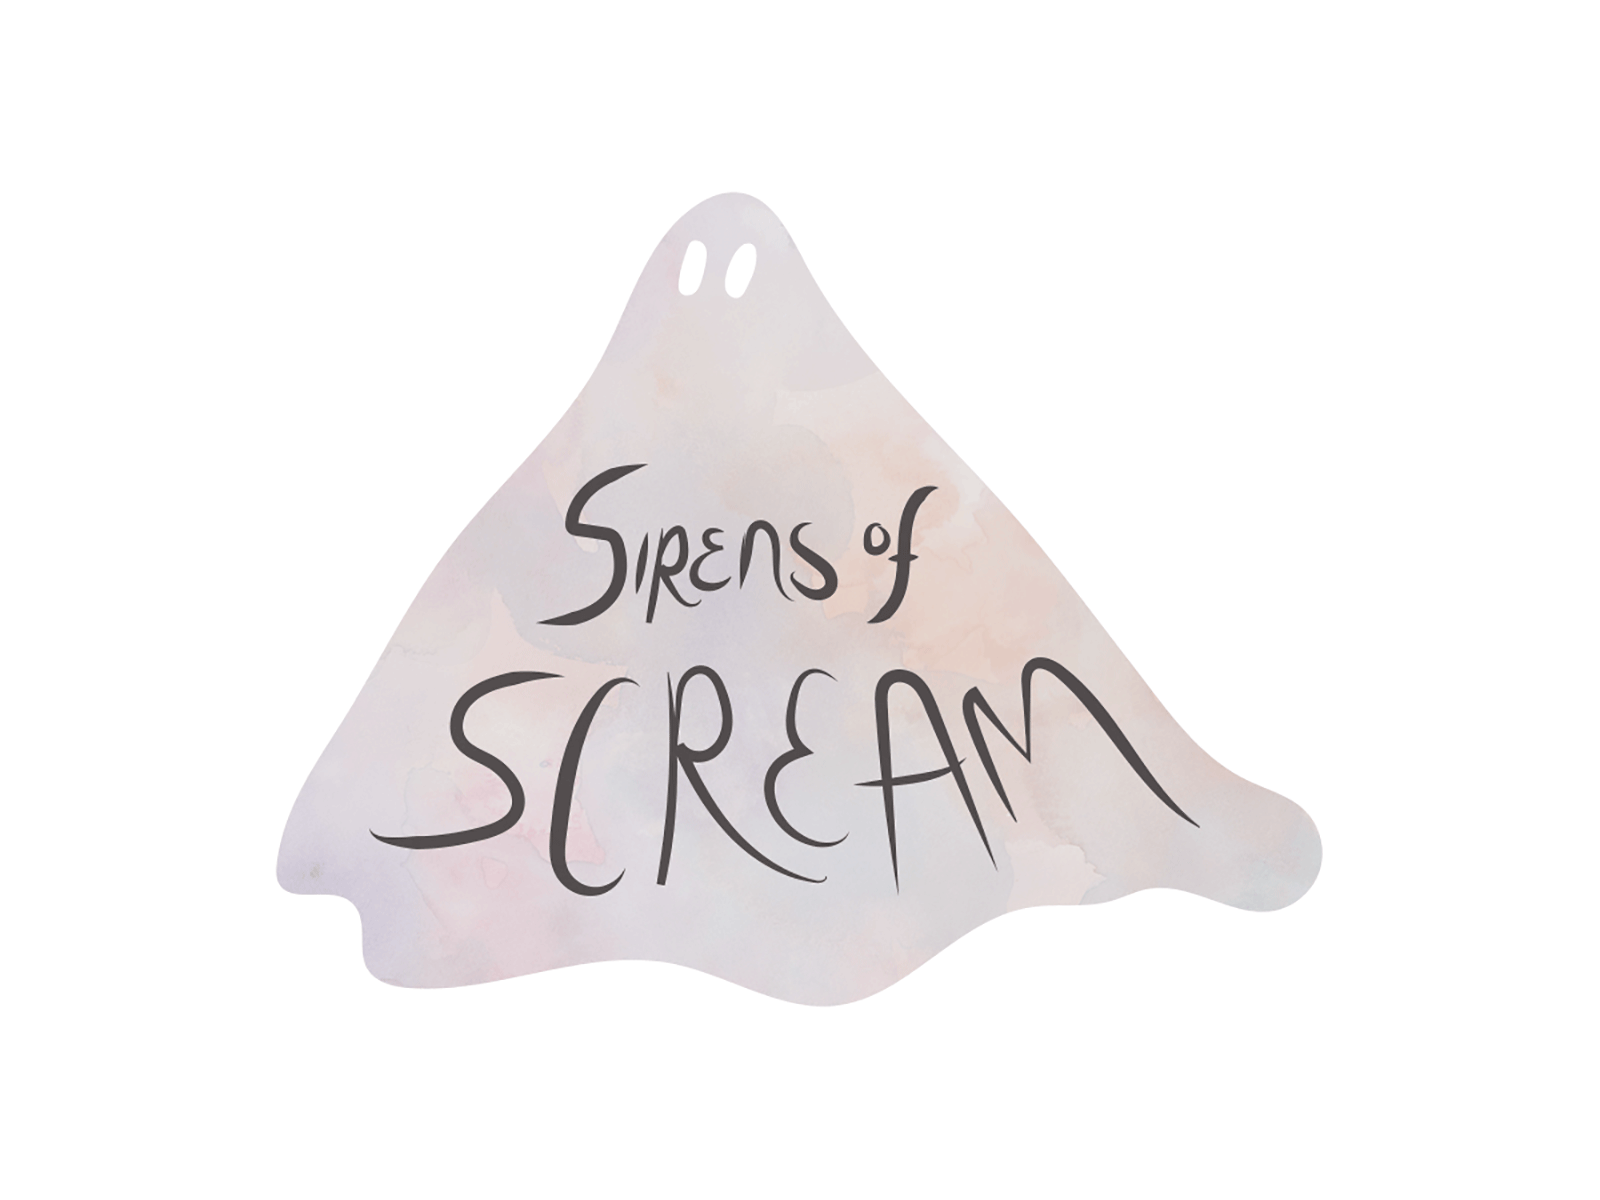 Sirens of Scream